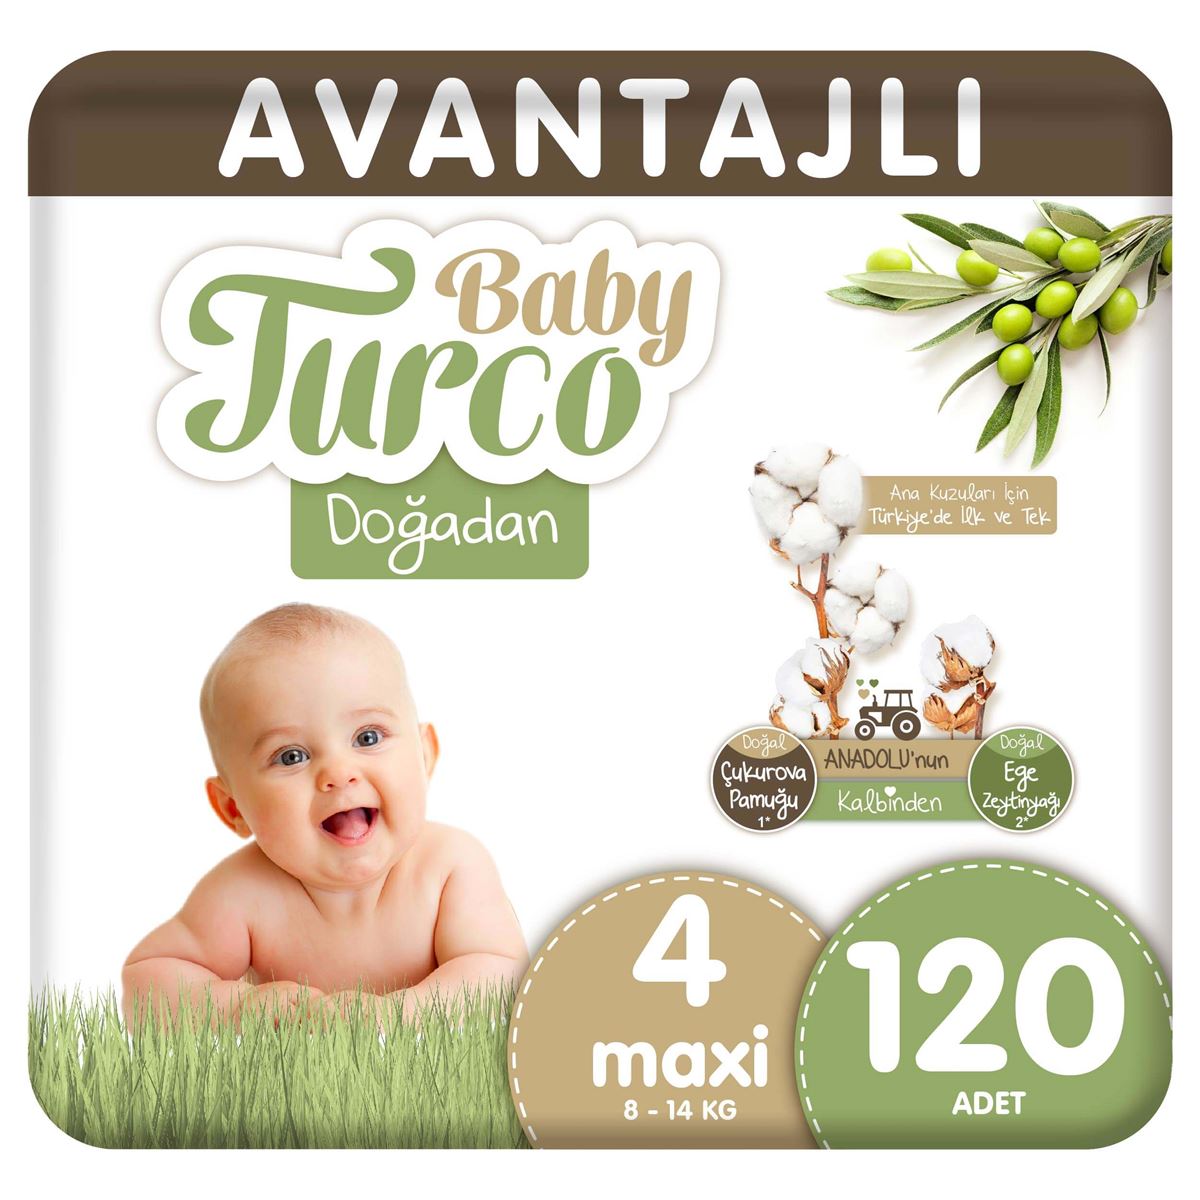 Baby Turco Doğadan Avantajlı Bebek Bezi 4 Numara Maxi 120 Adet